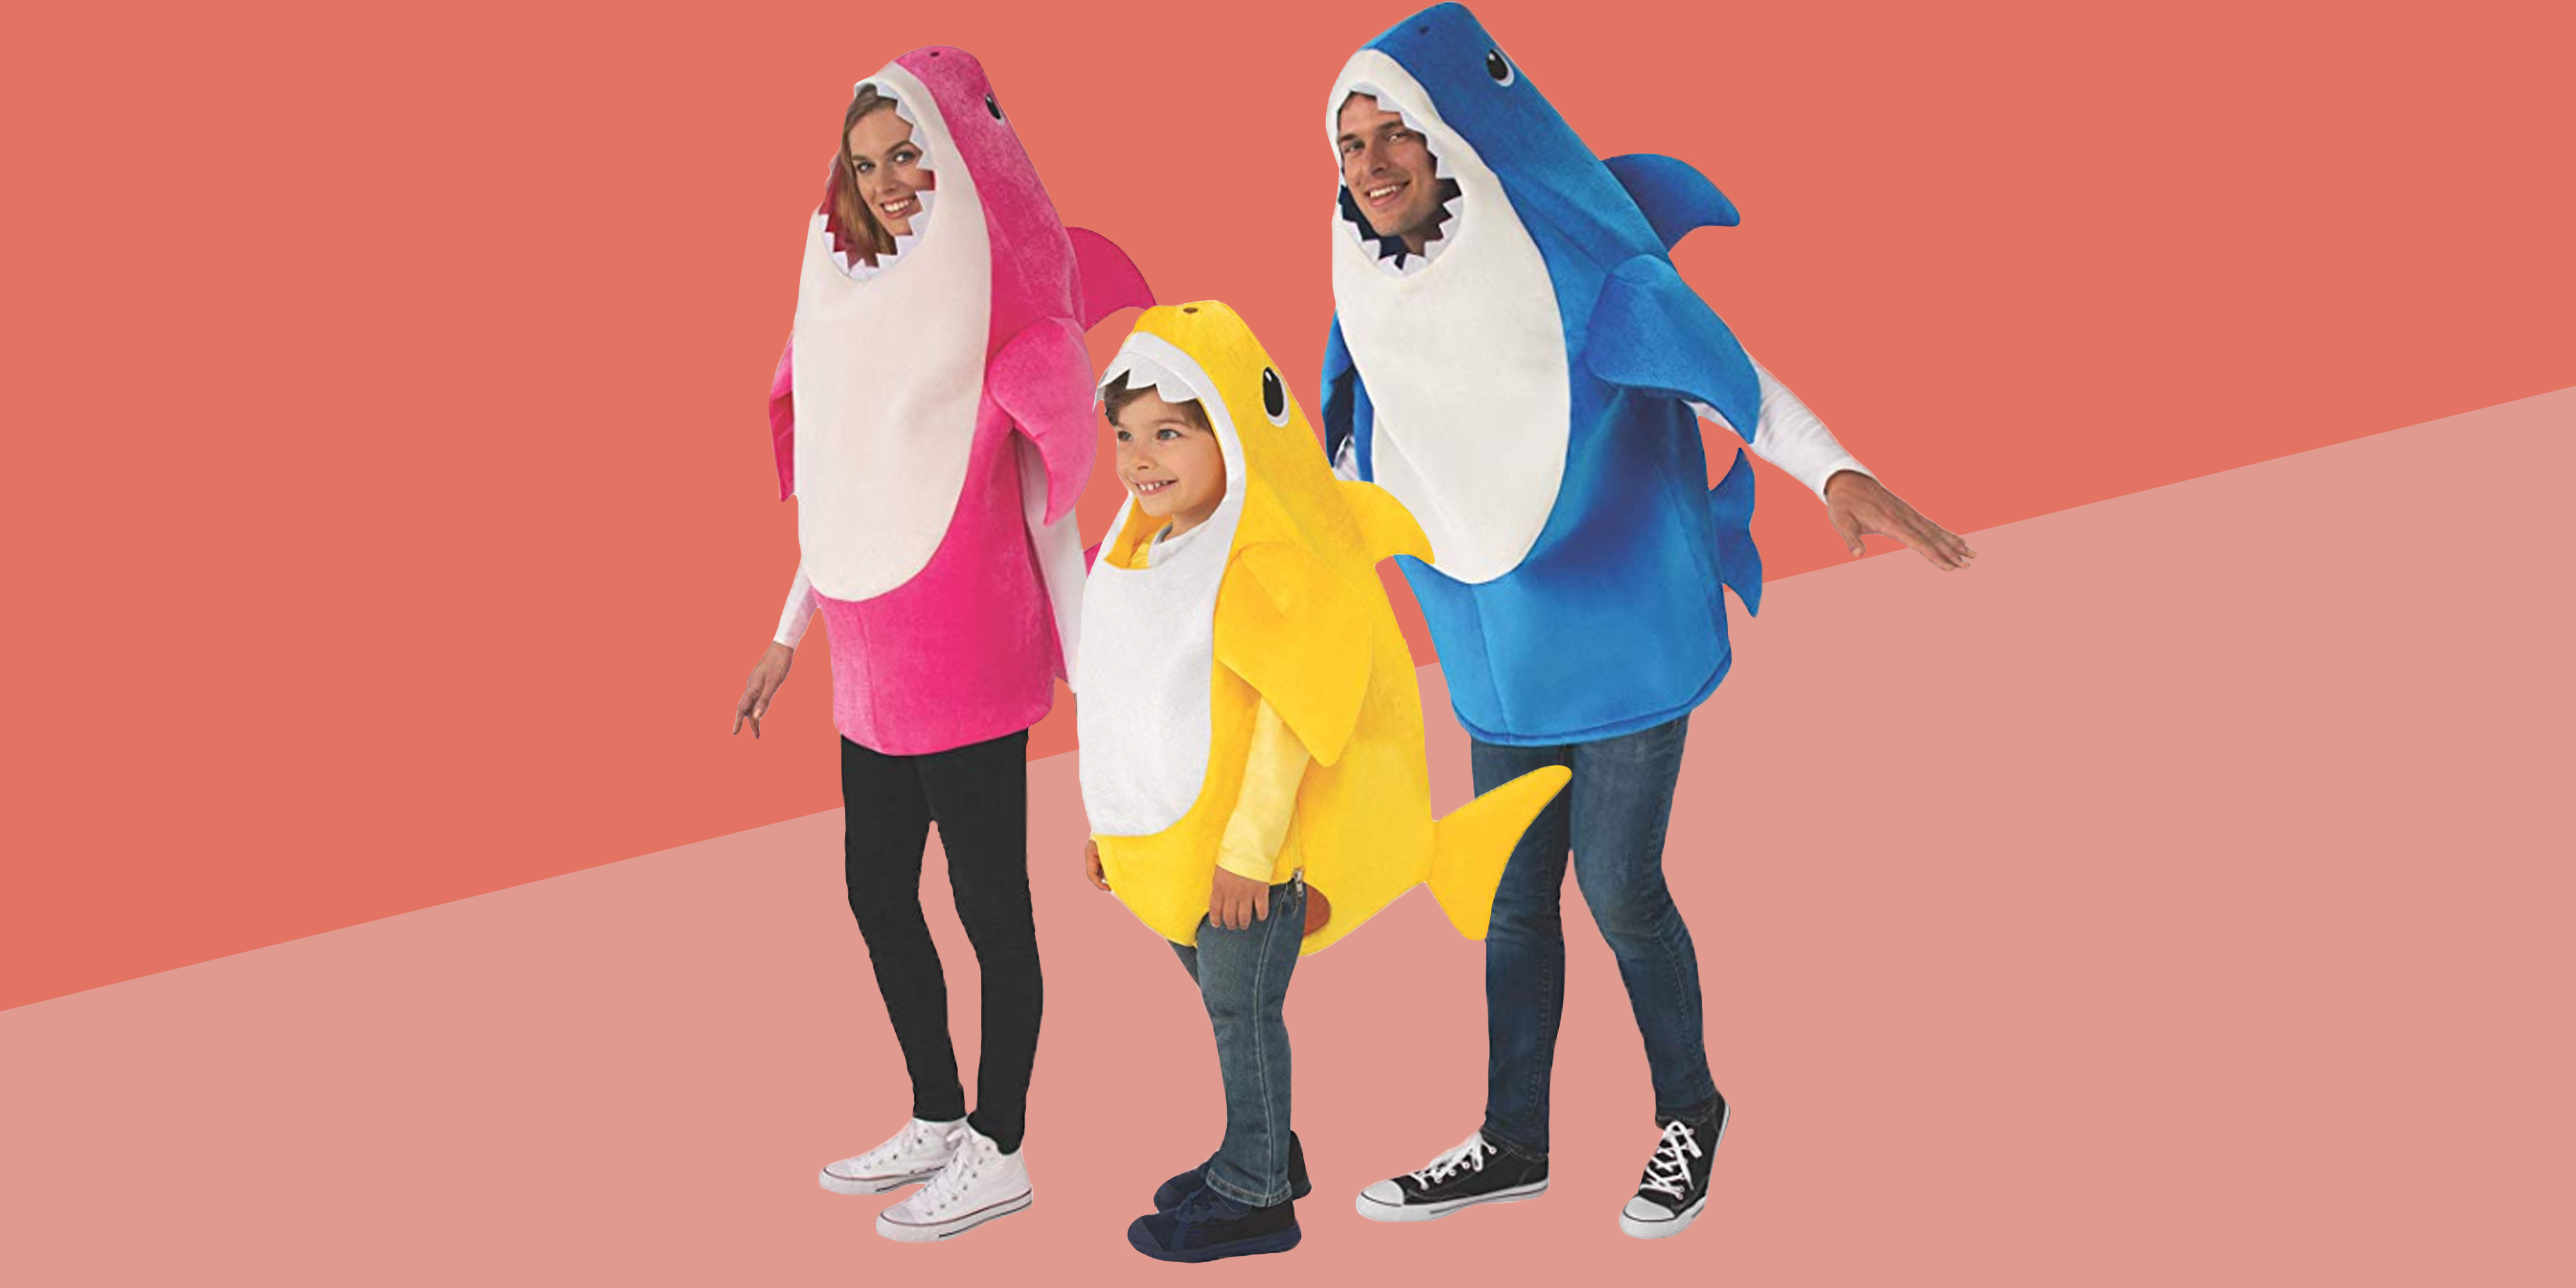 Baby Shark Halloween Costume Ideas - Pinkfong Shark Family Outfits